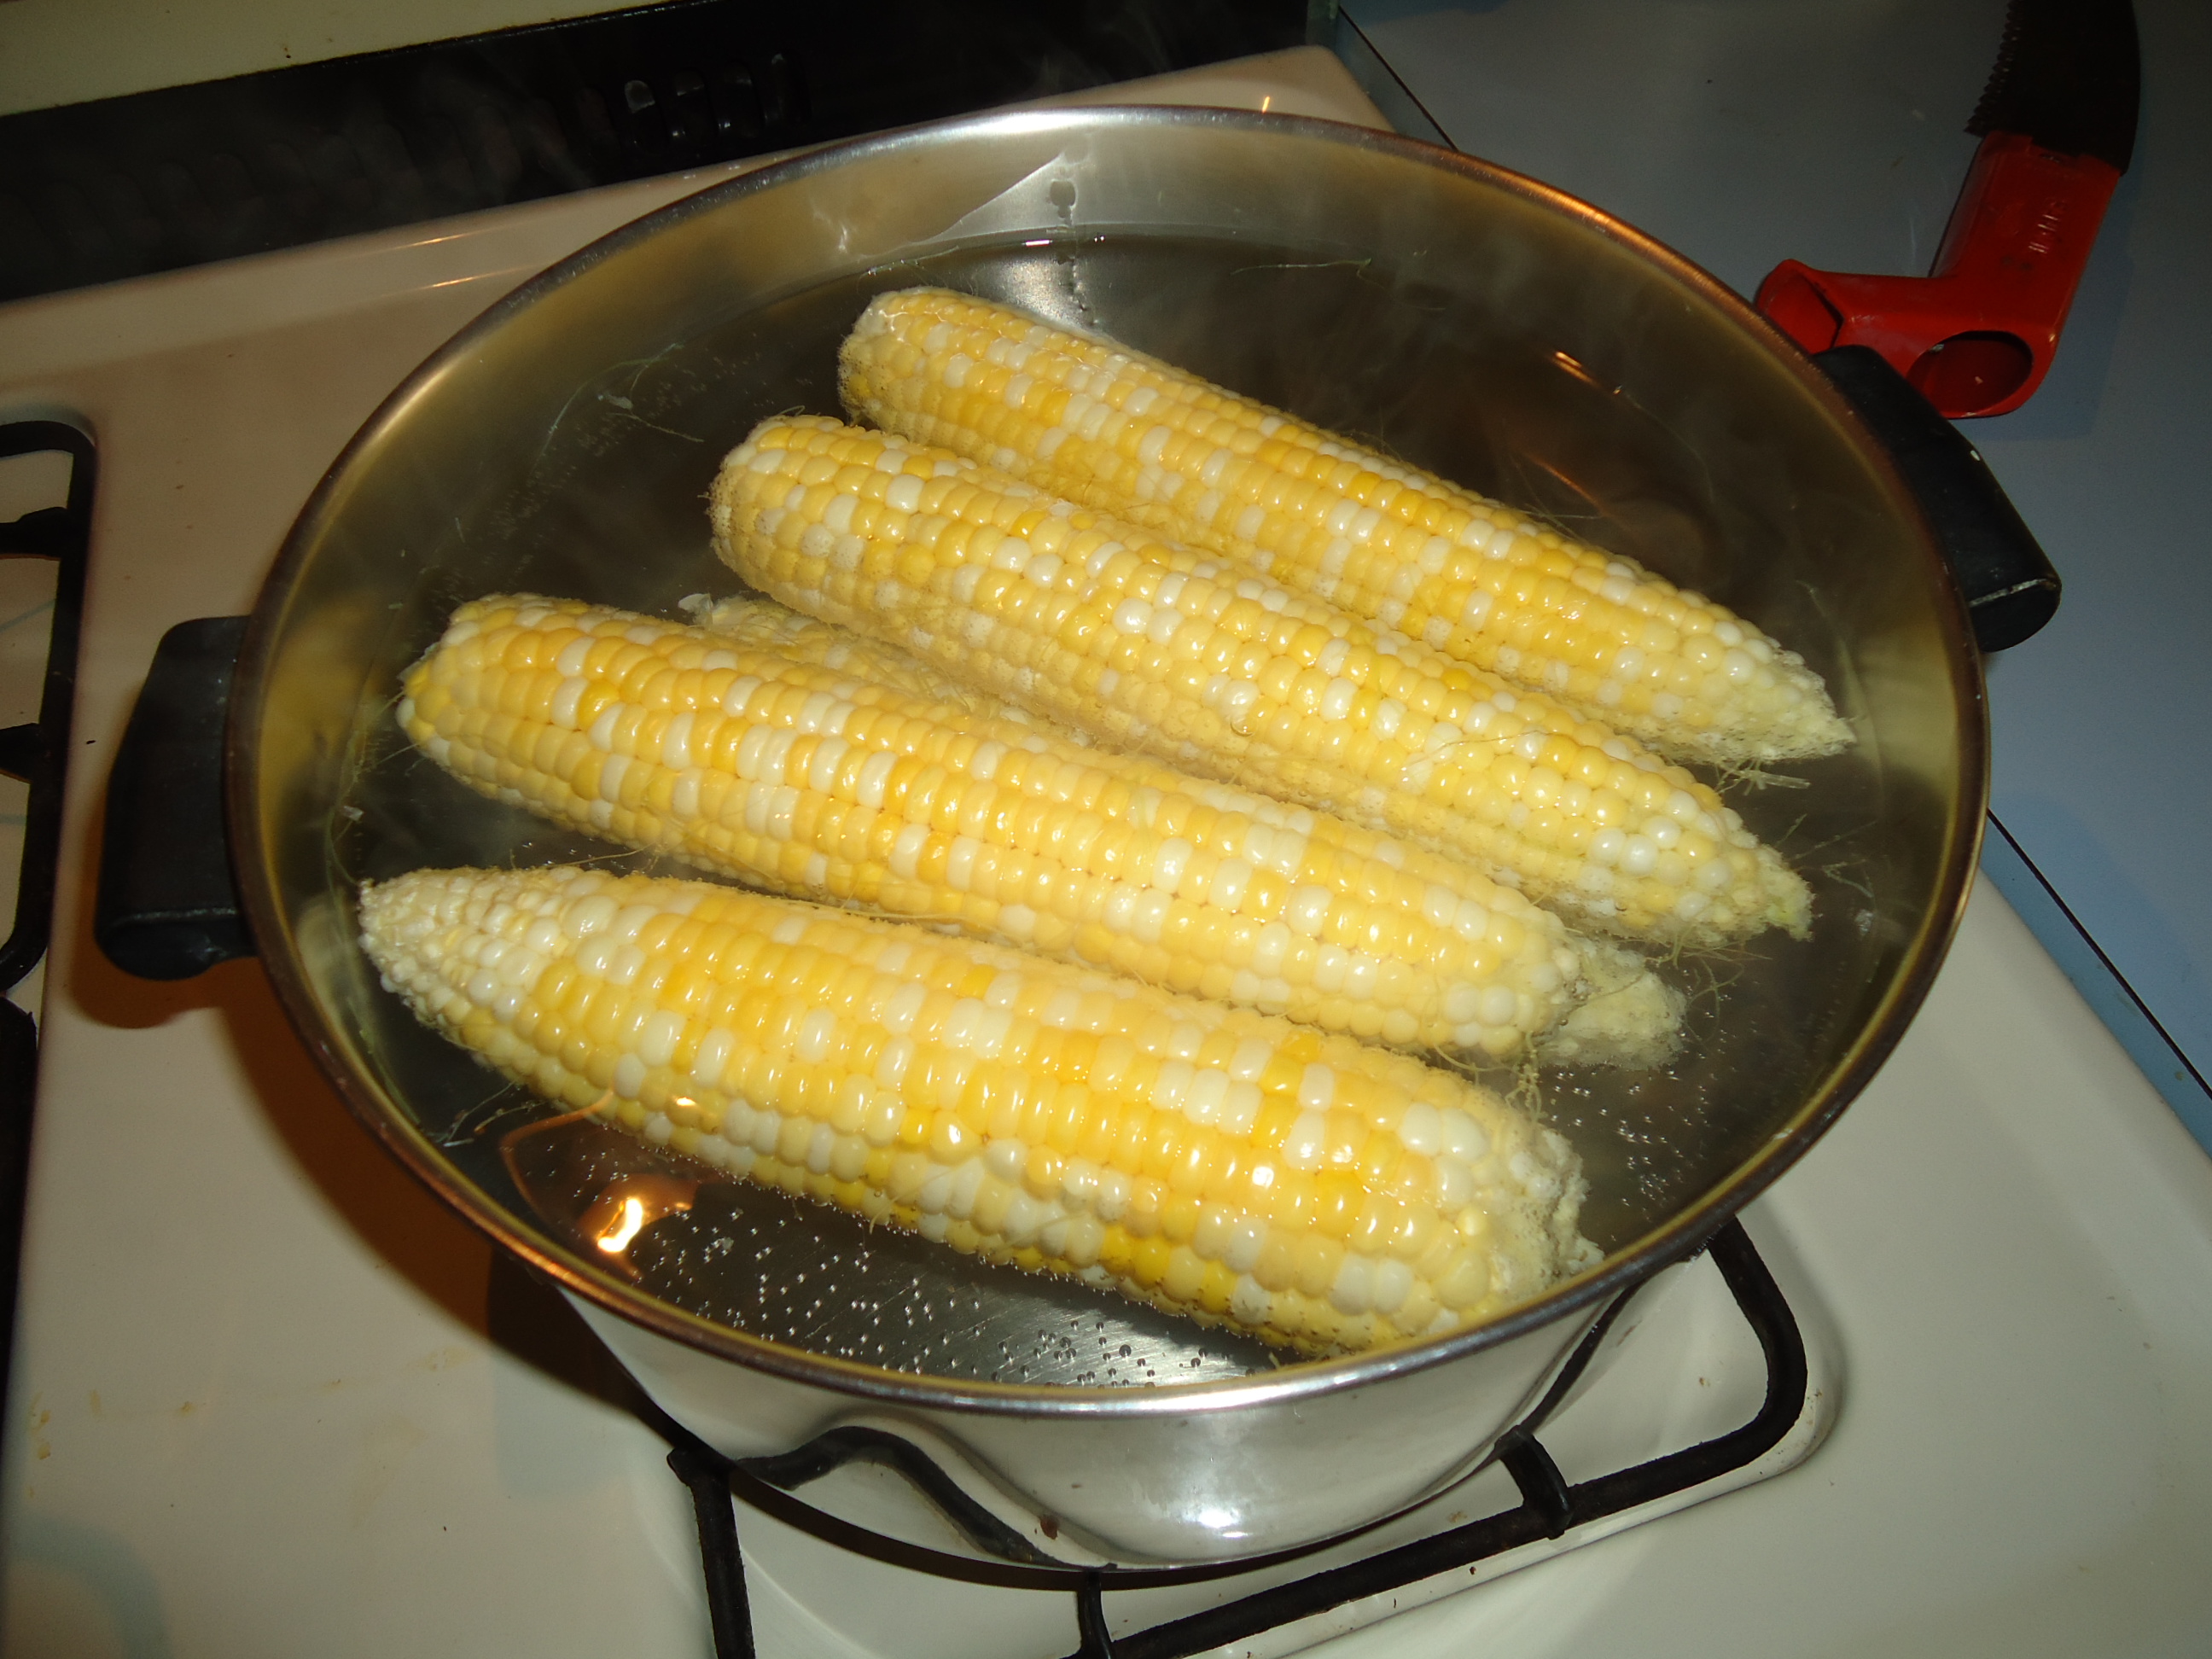 Corn on the cob photo